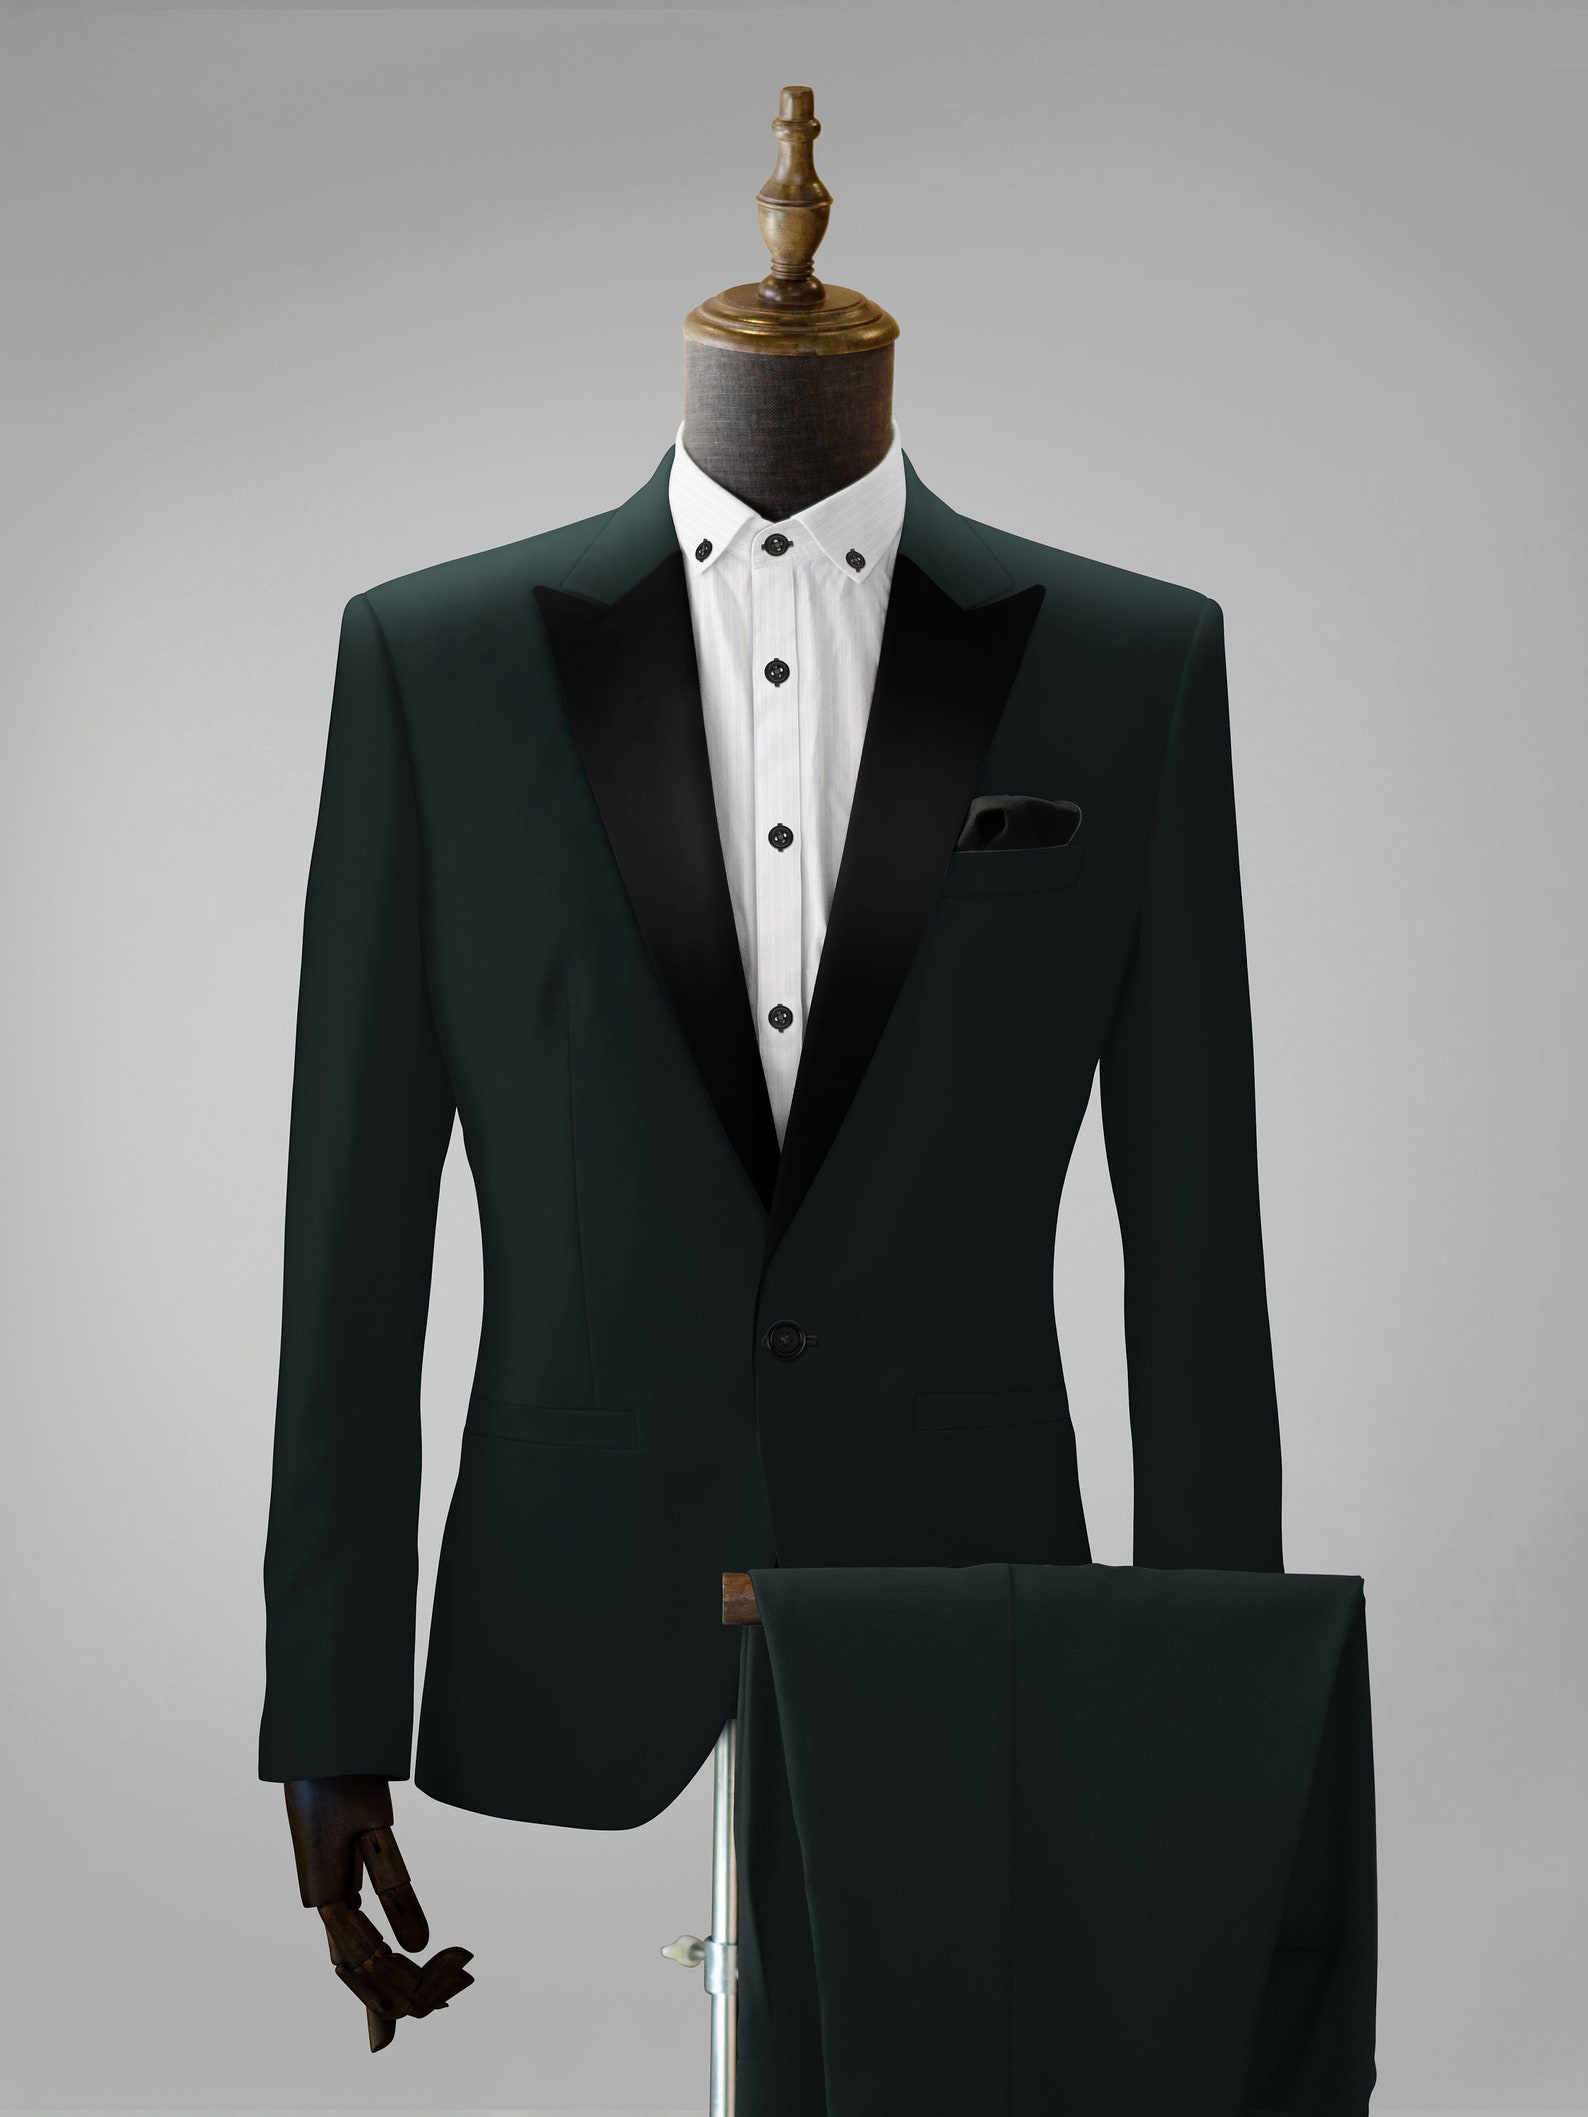 MEN SUITS Suits for Men Green Tuxedo Wedding Suit Dinner | Etsy